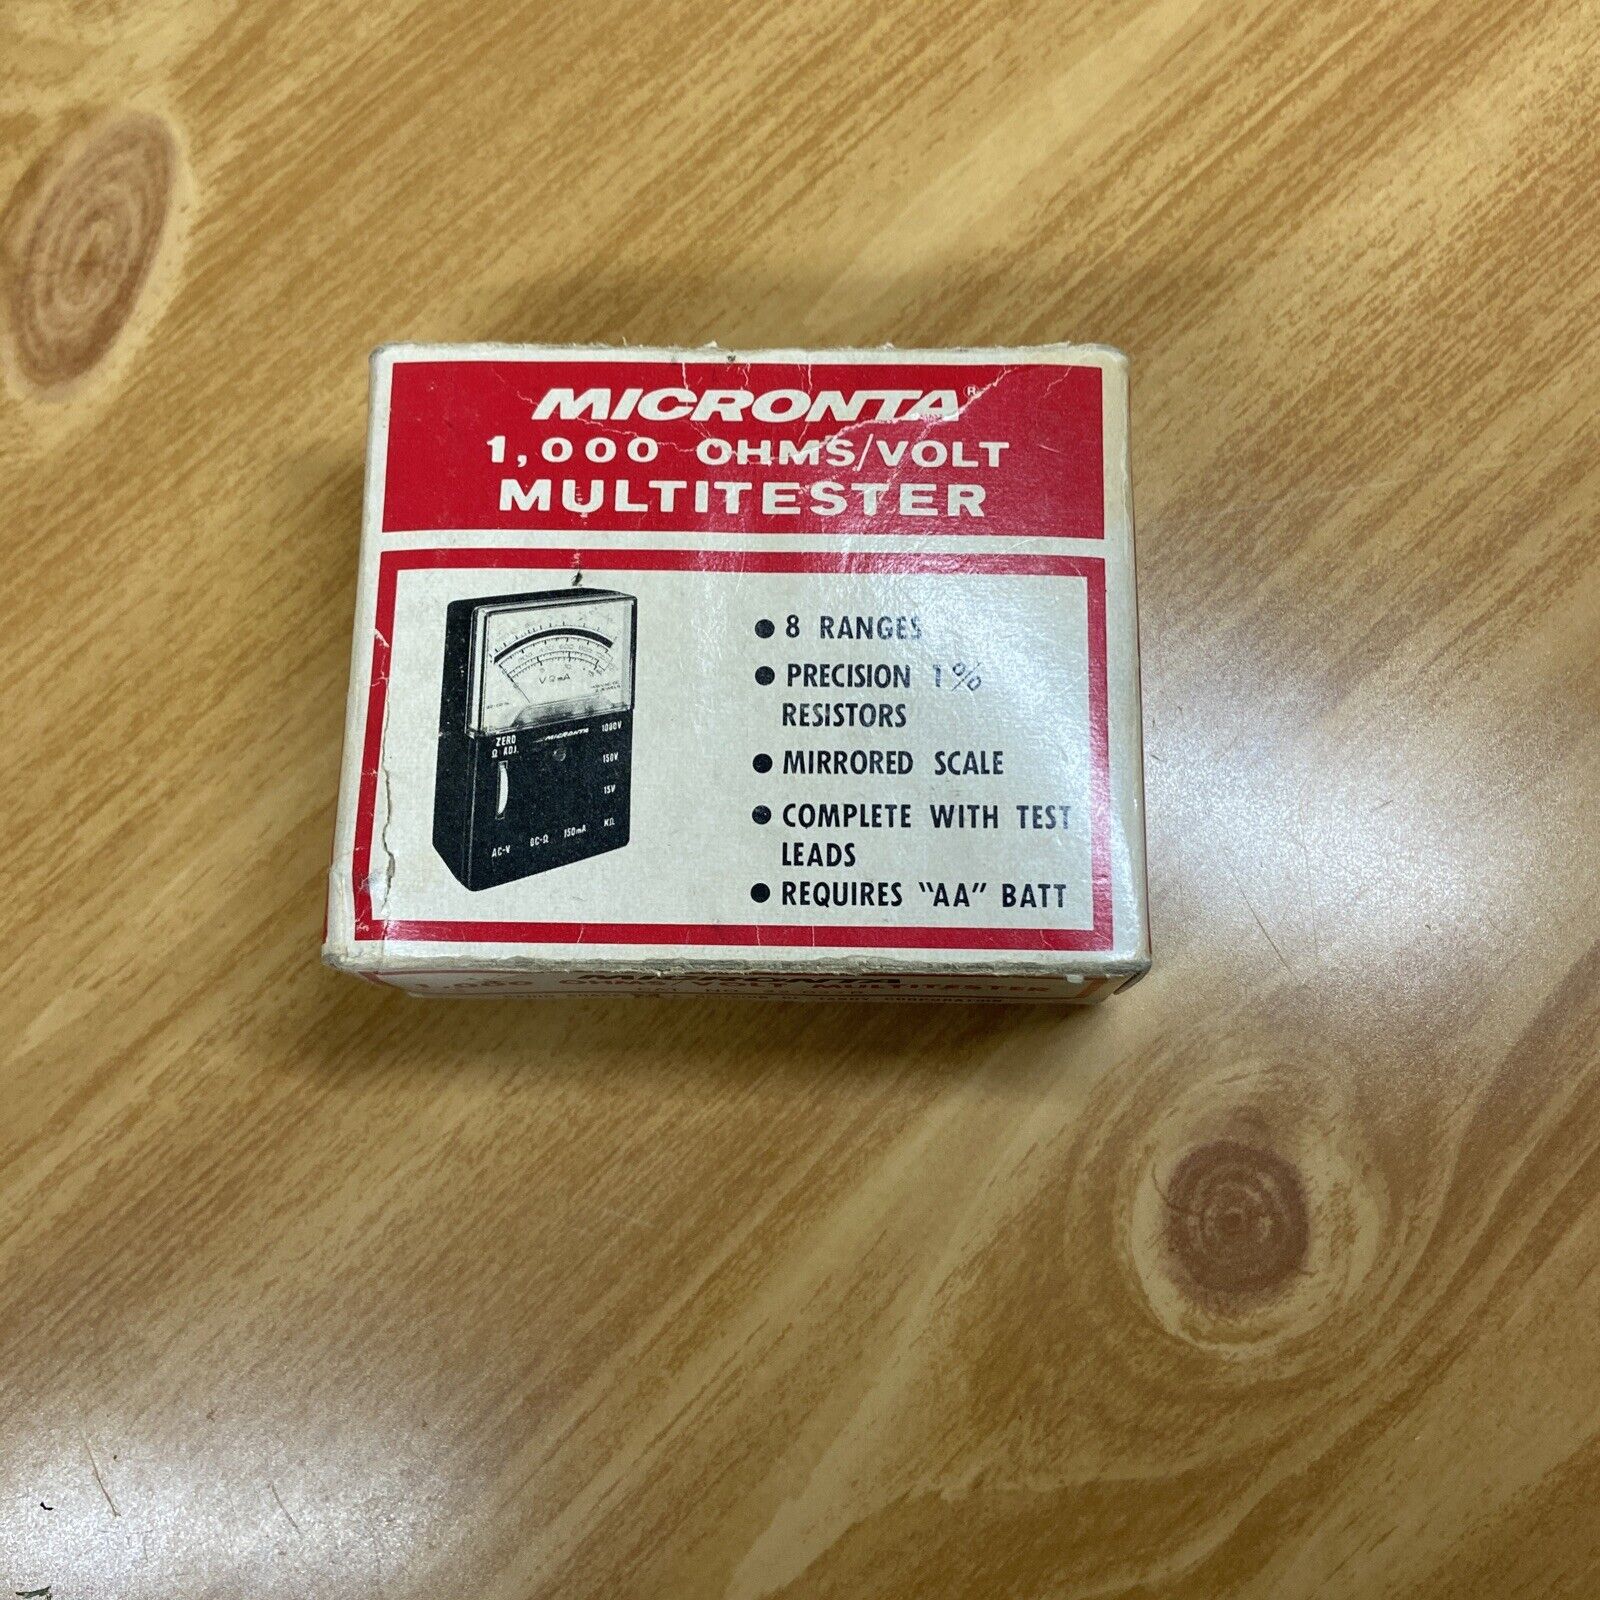 Micronta 1.000 Ohms/Volts Multitest New Old Stock Retro Vintage